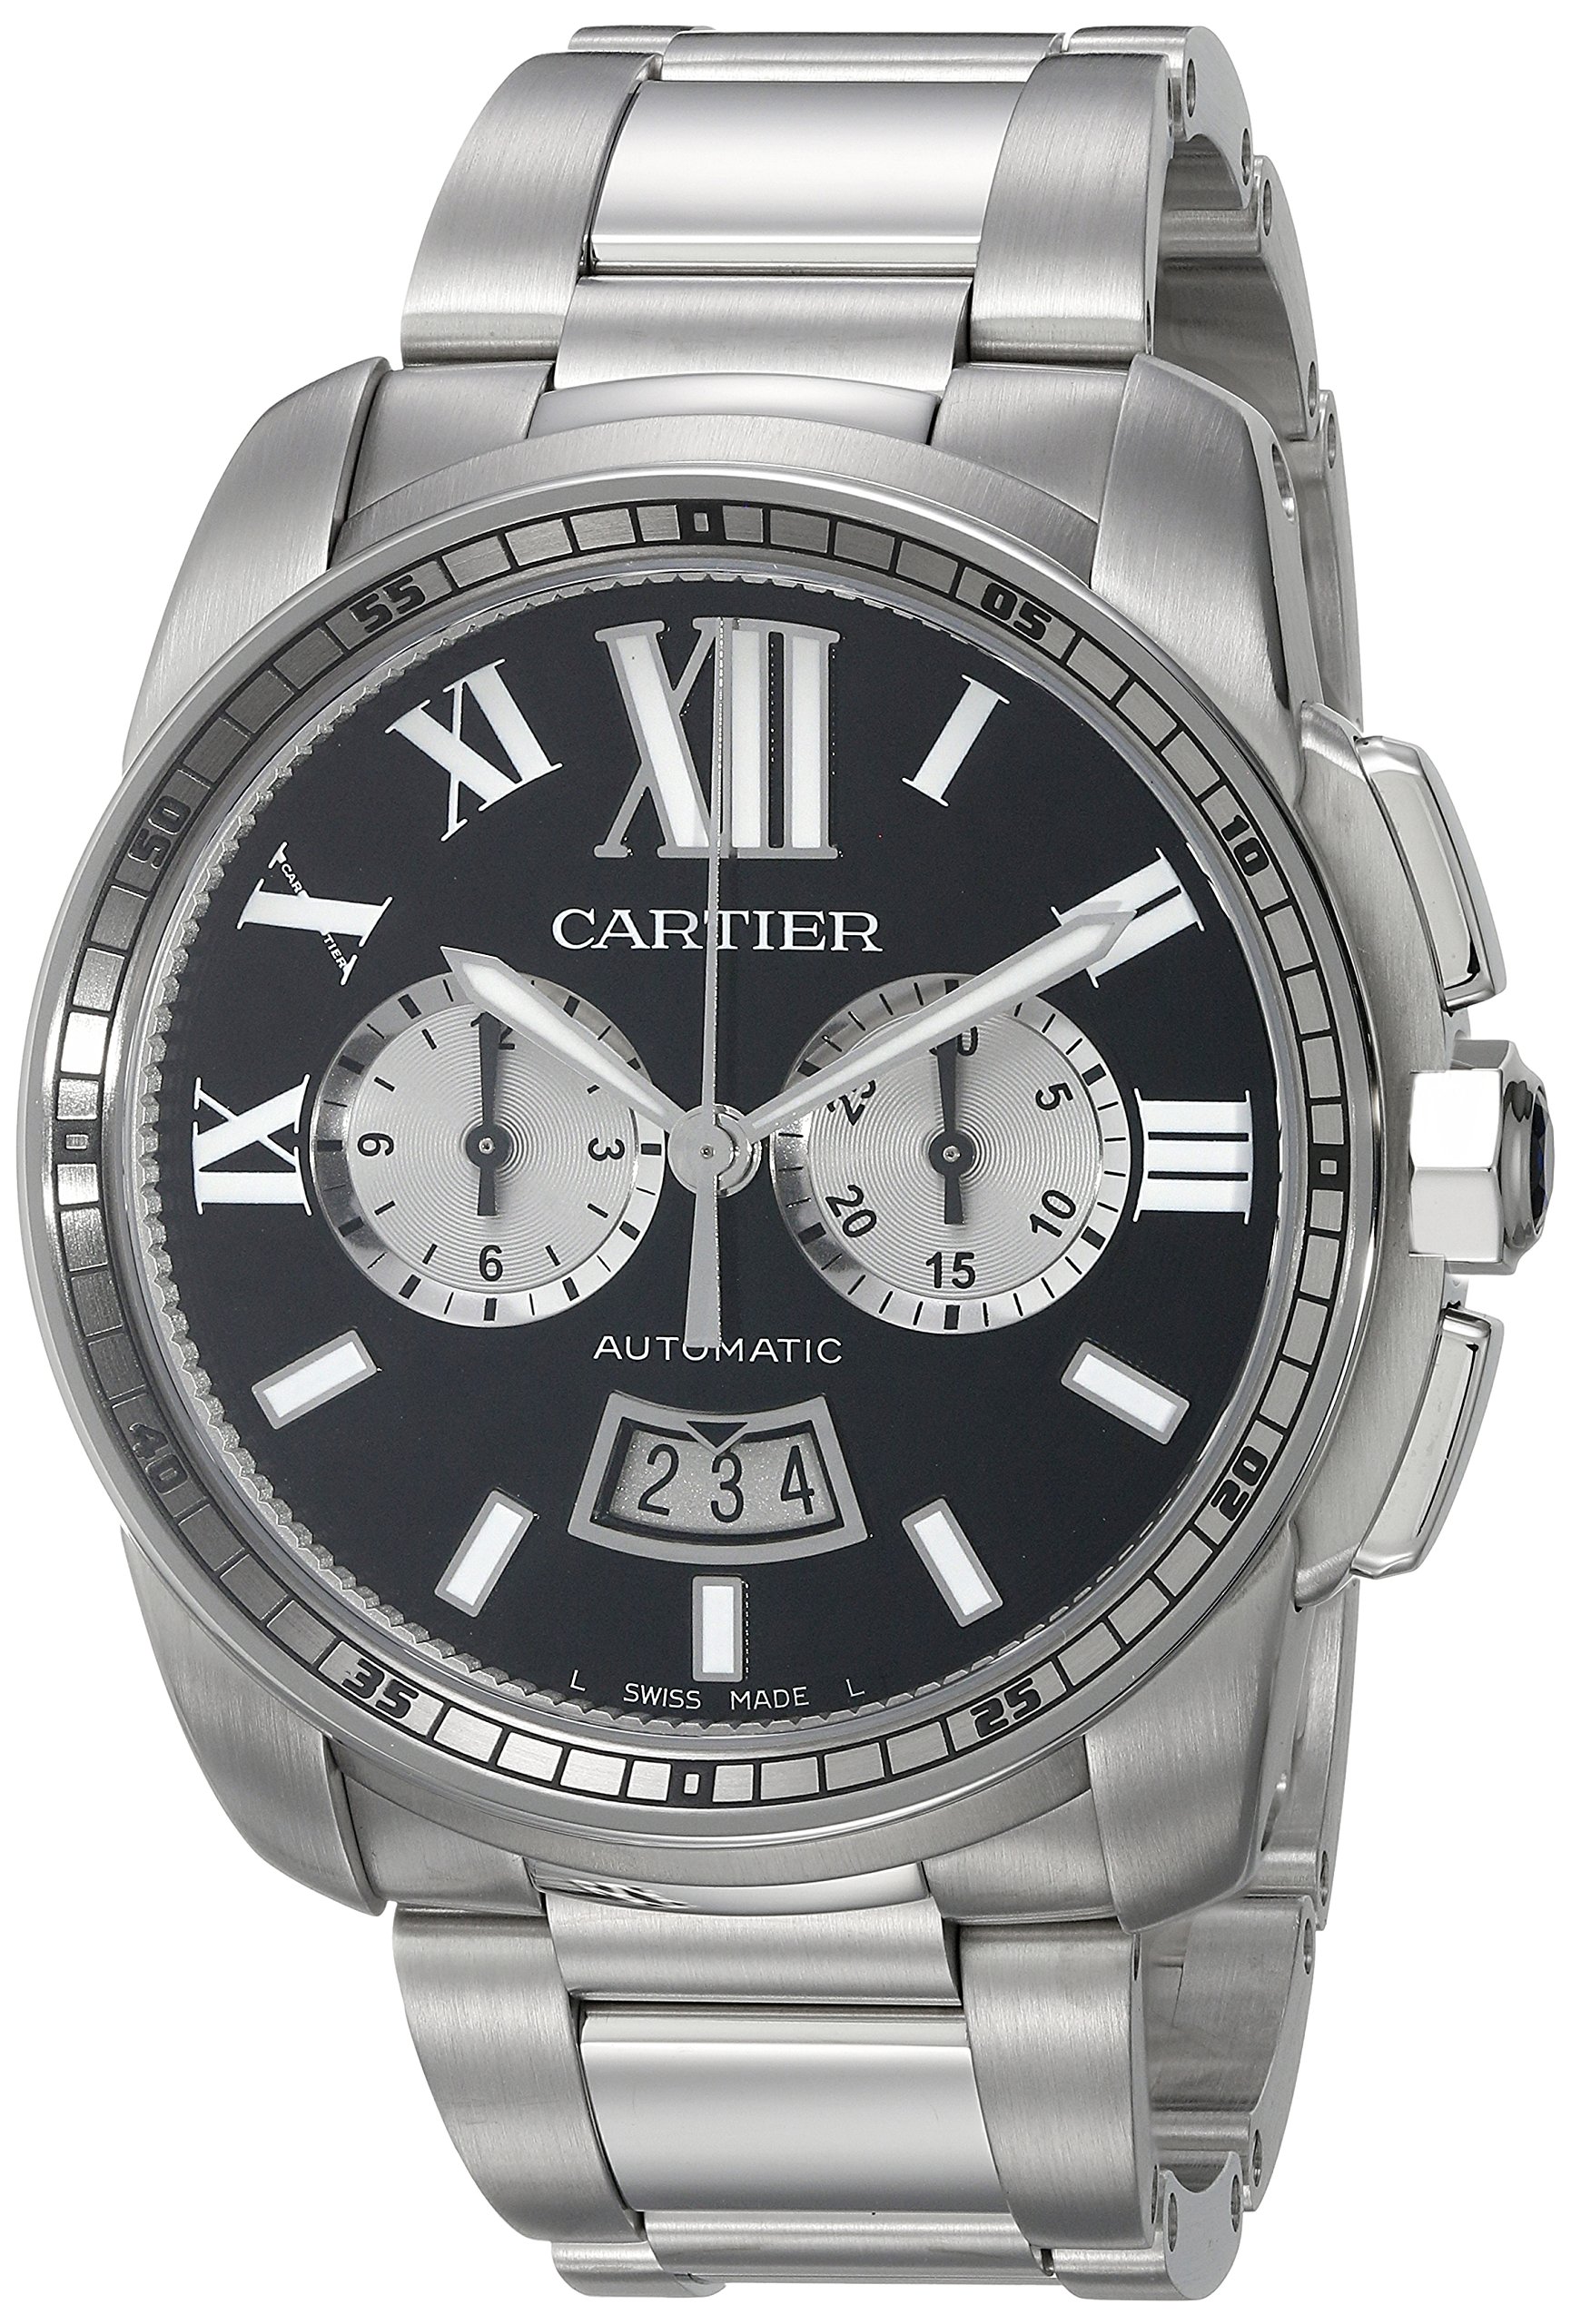 Cartier Men's W7100061 Analog Display Swiss Automatic Silver Watch